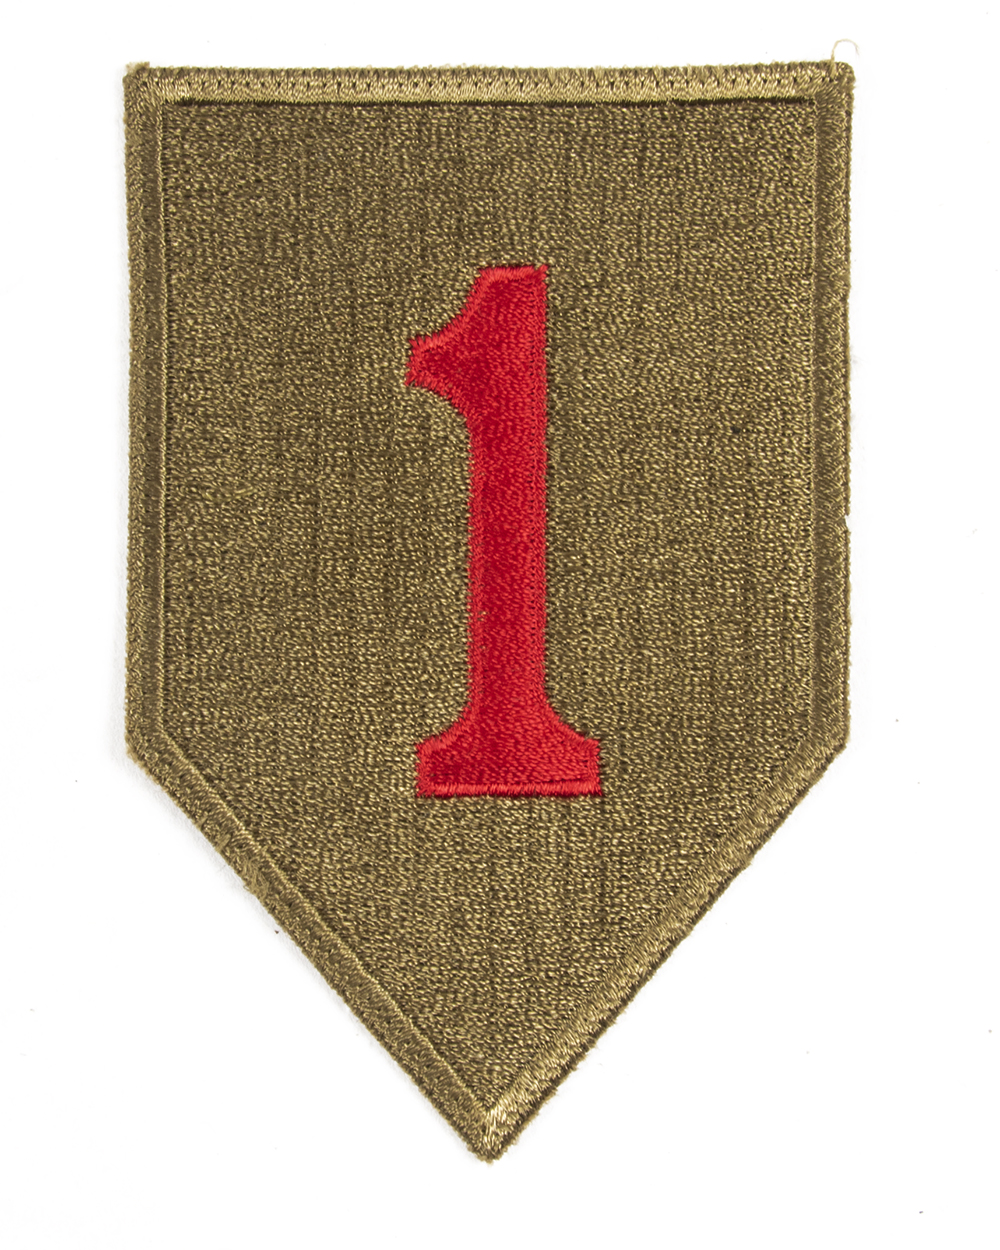 WWII 1st Infantry Division Shoulder Patch